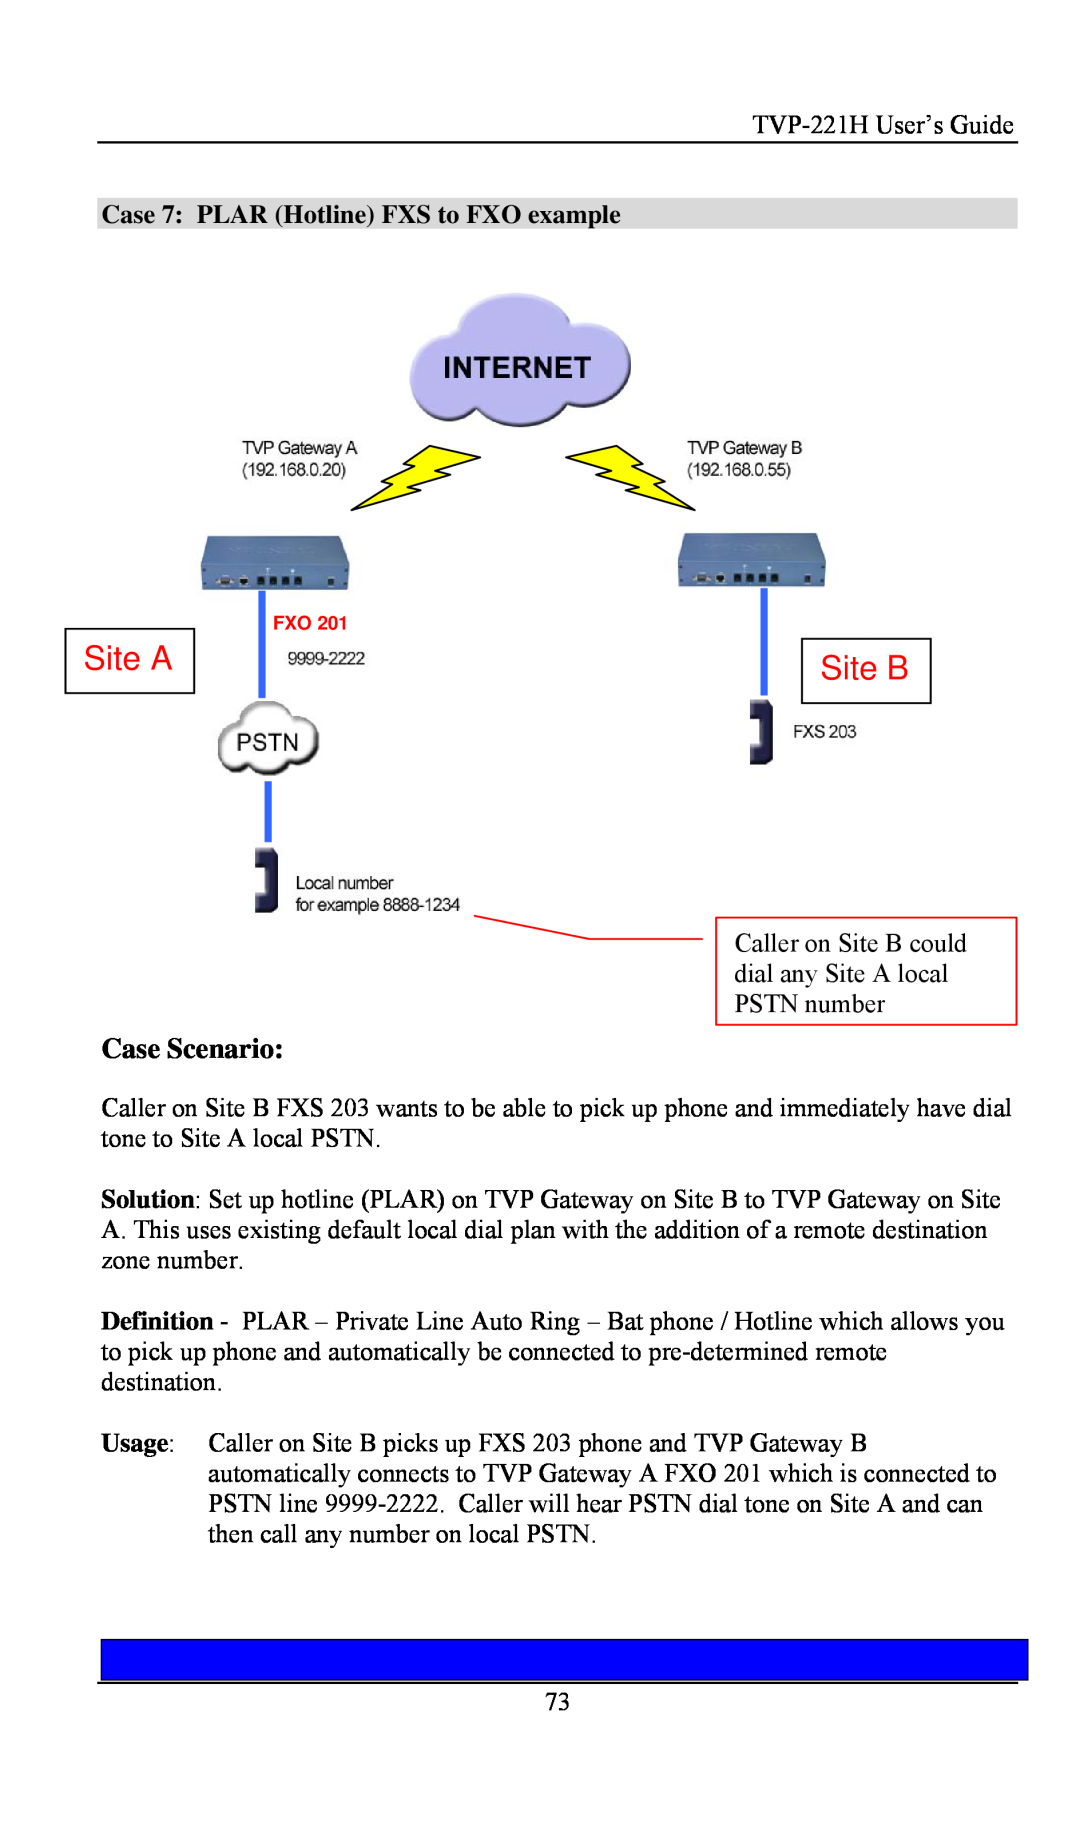 TRENDnet VoIP Gateway, TVP- 221H manual Site A, Site B, Case Scenario, Case 7 PLAR Hotline FXS to FXO example 